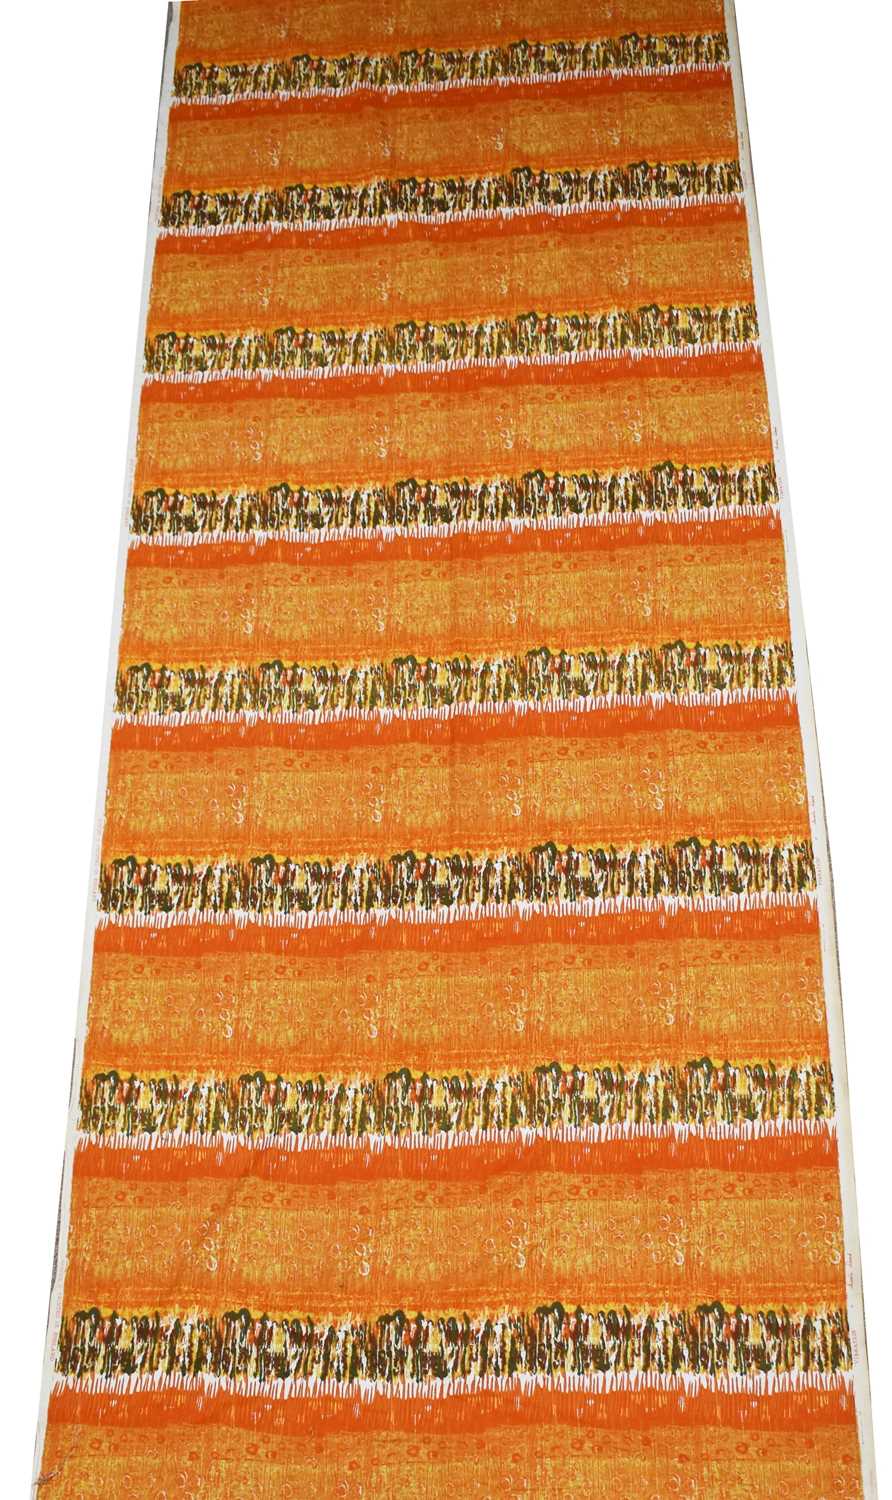 Lot 1022 - Vintage fabric, "Vibration" by Nicola Wood